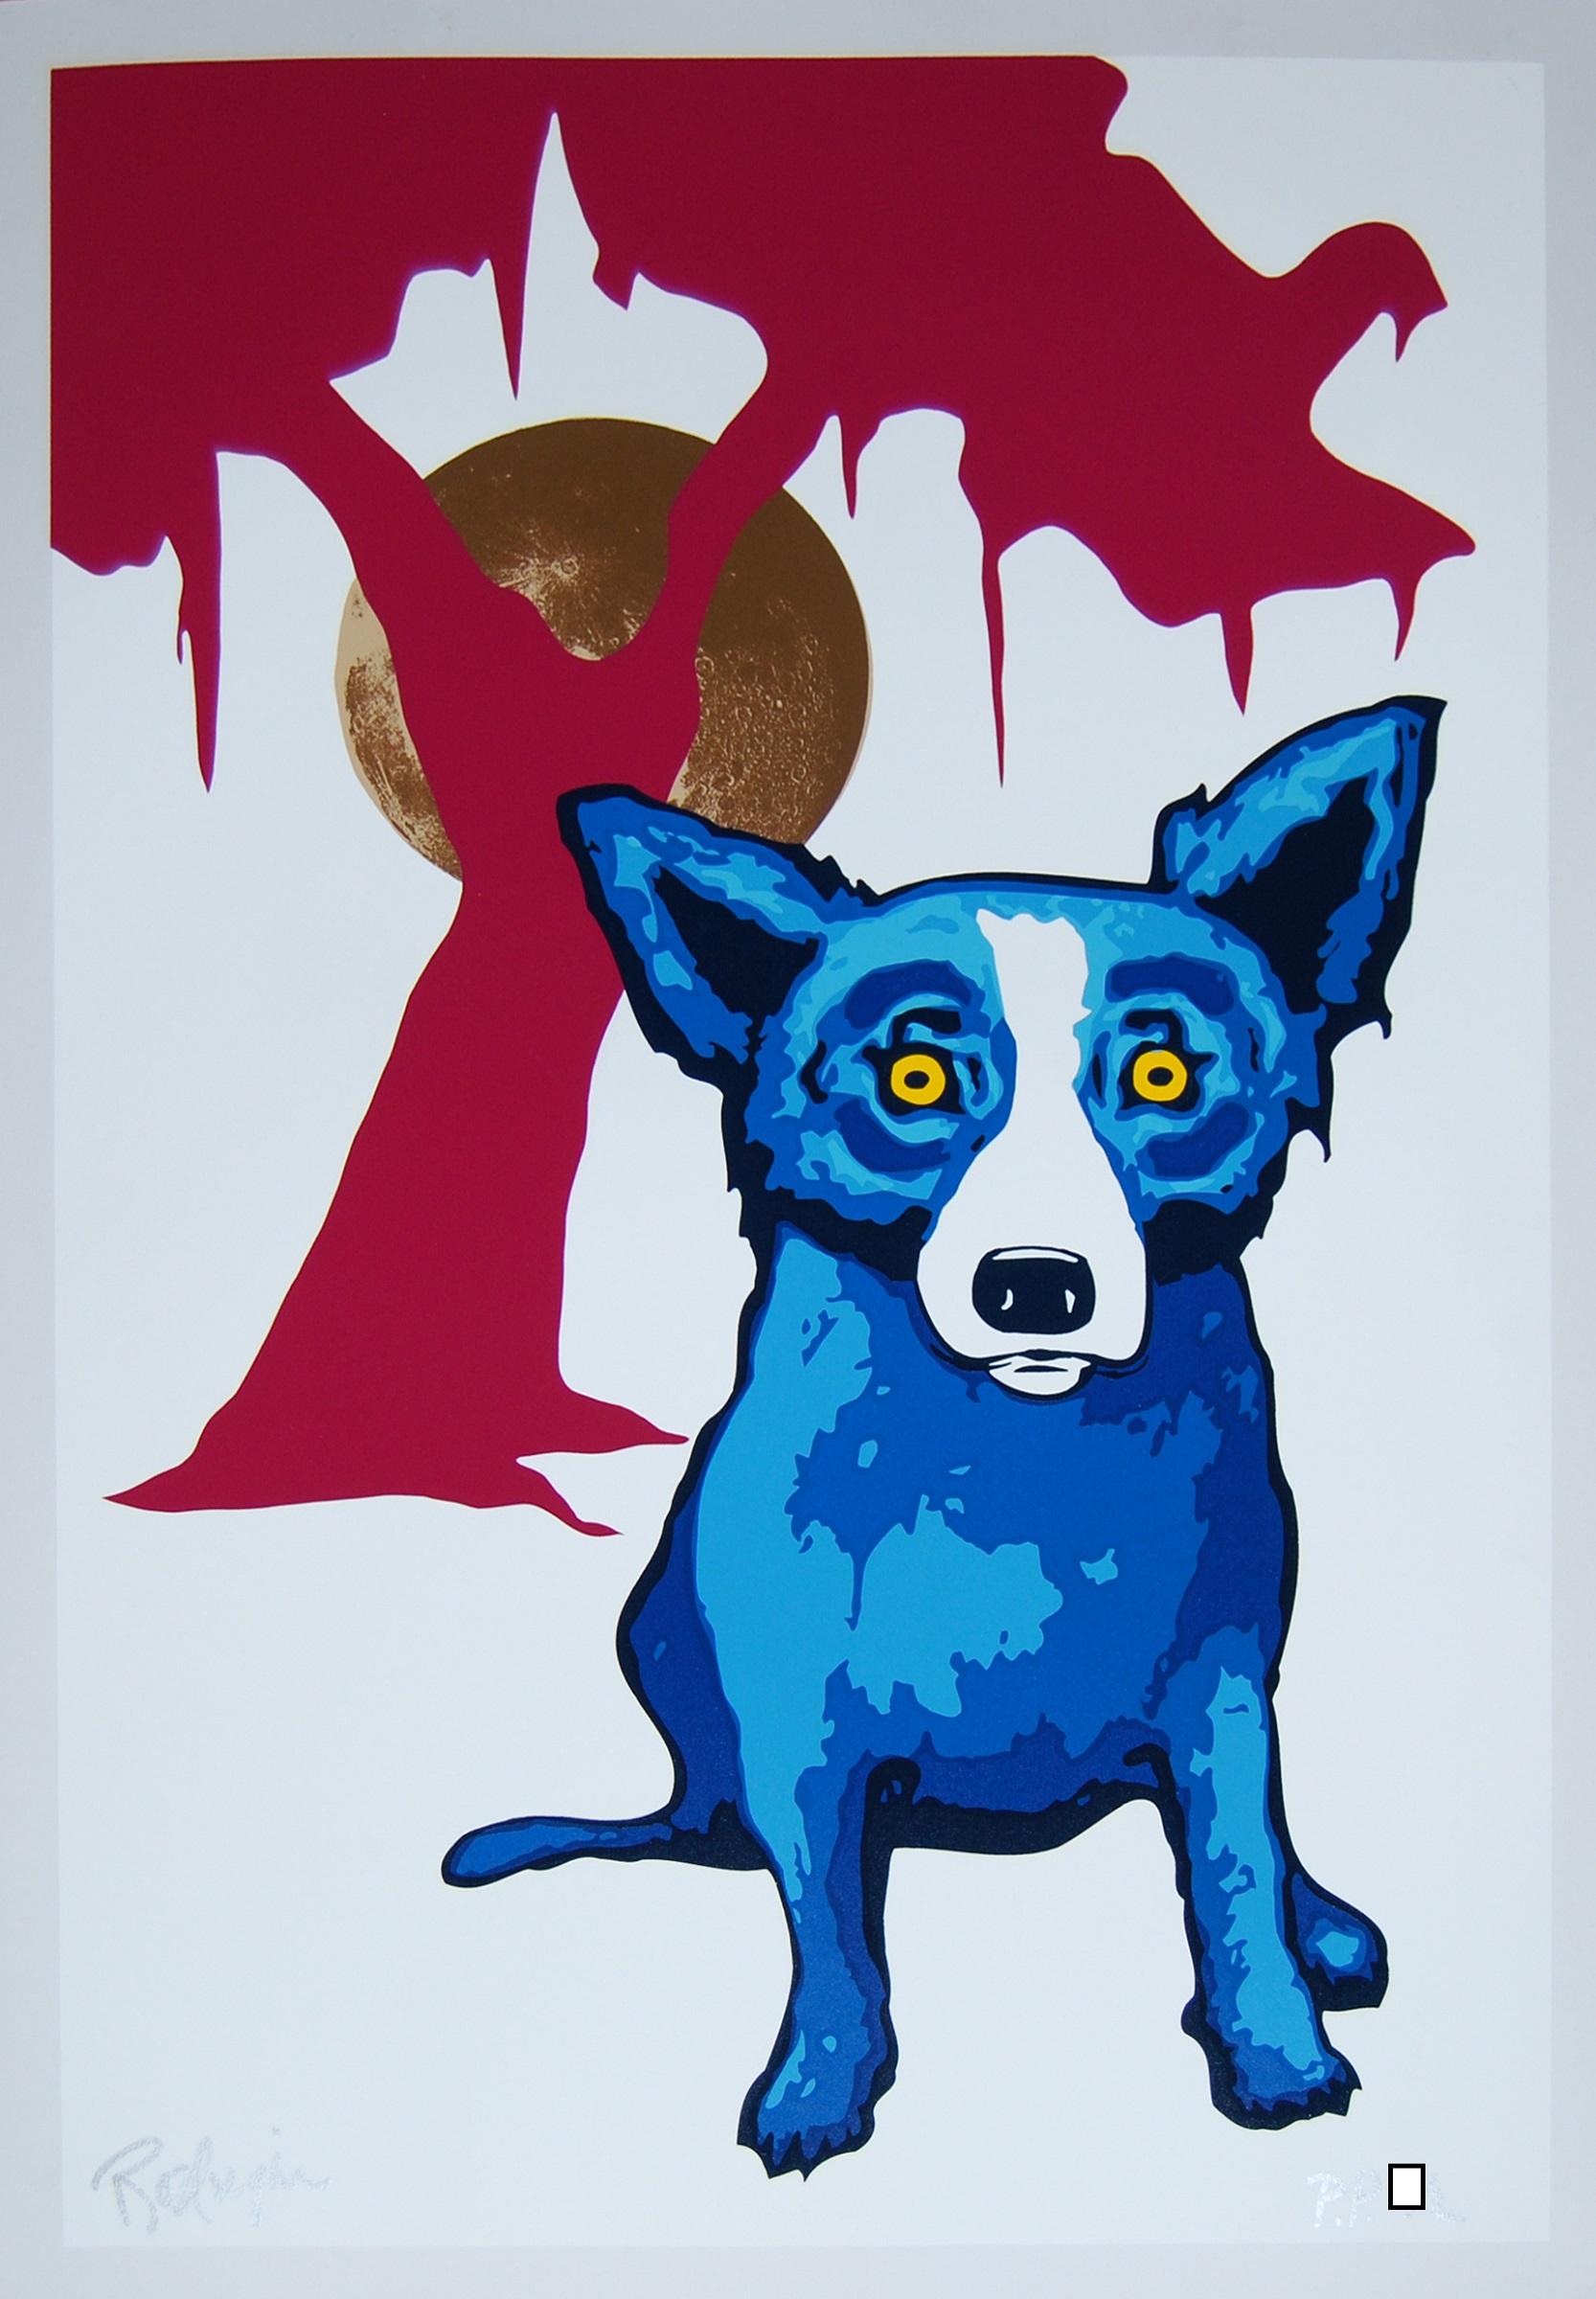 George Rodrigue Animal Print - Y-Moon White/Pink Tree - Signed Silkscreen Blue Dog Print